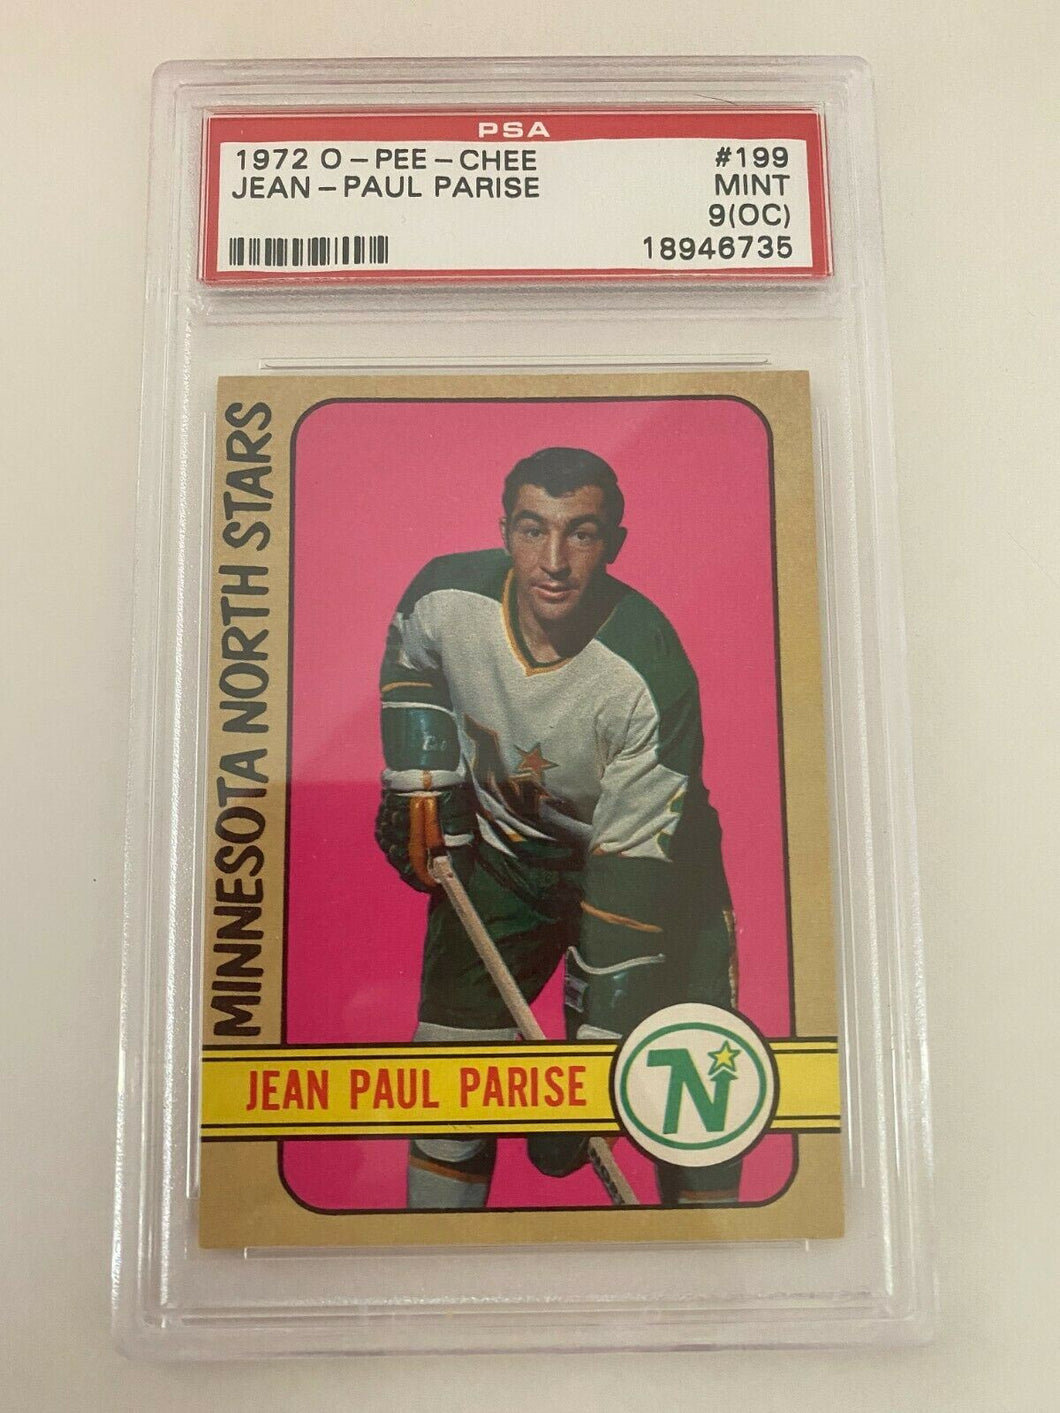 PSA Graded Mint 9 OC  1972 O-pee-chee Jean Paul Parise Hockey Card #199